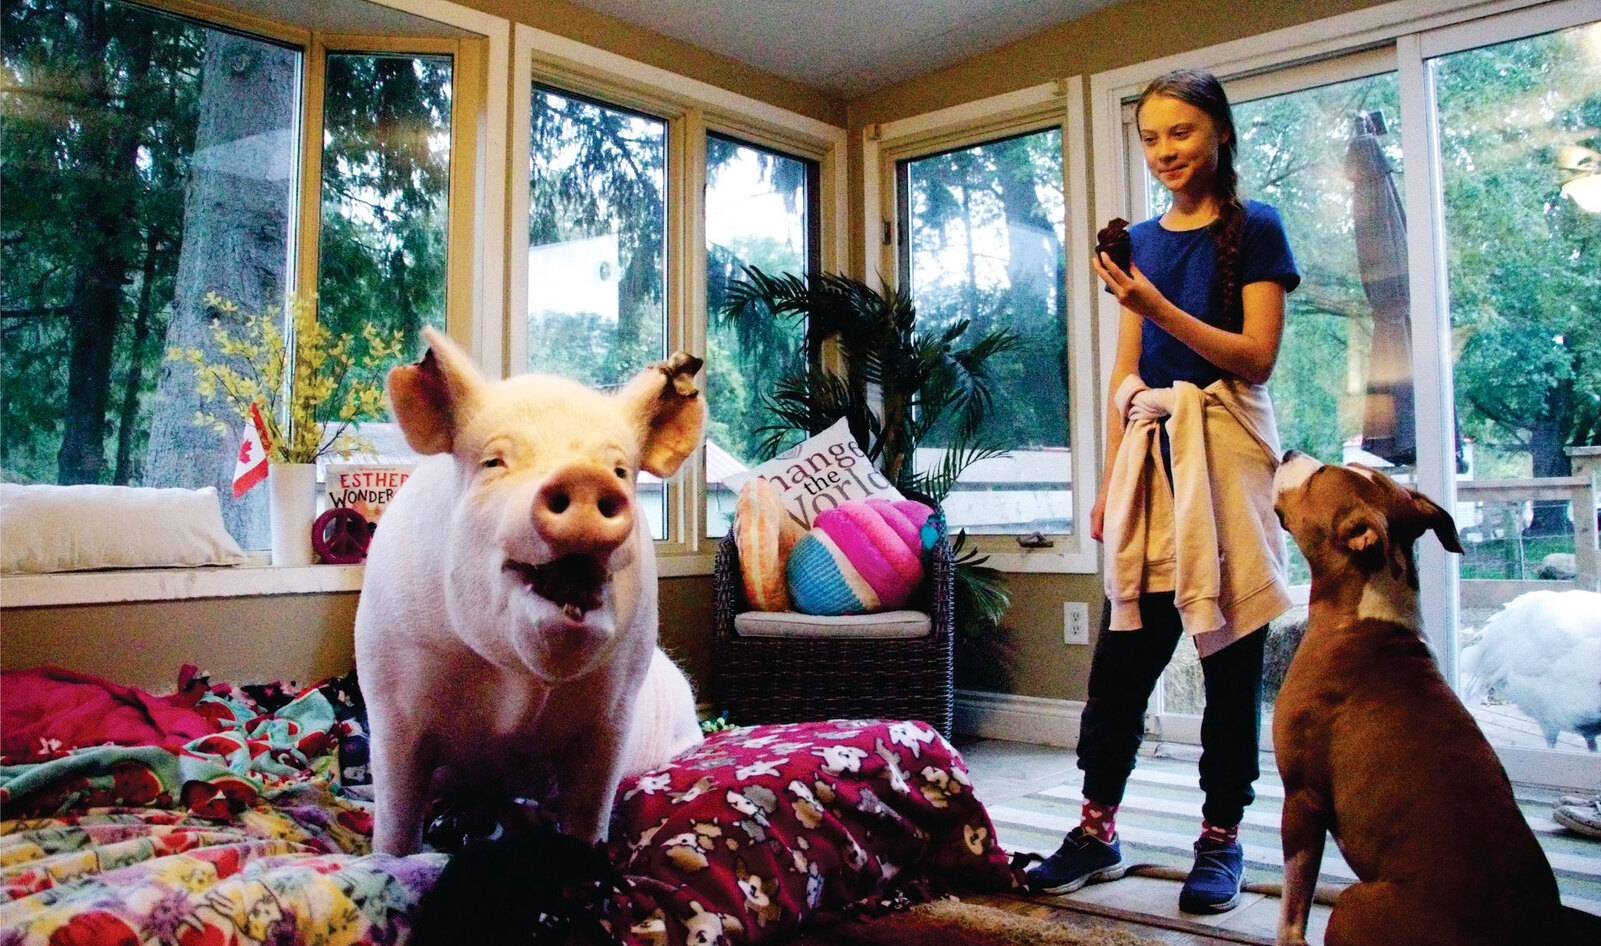 Together at Last: Greta Thunberg Meets Esther the Wonder Pig